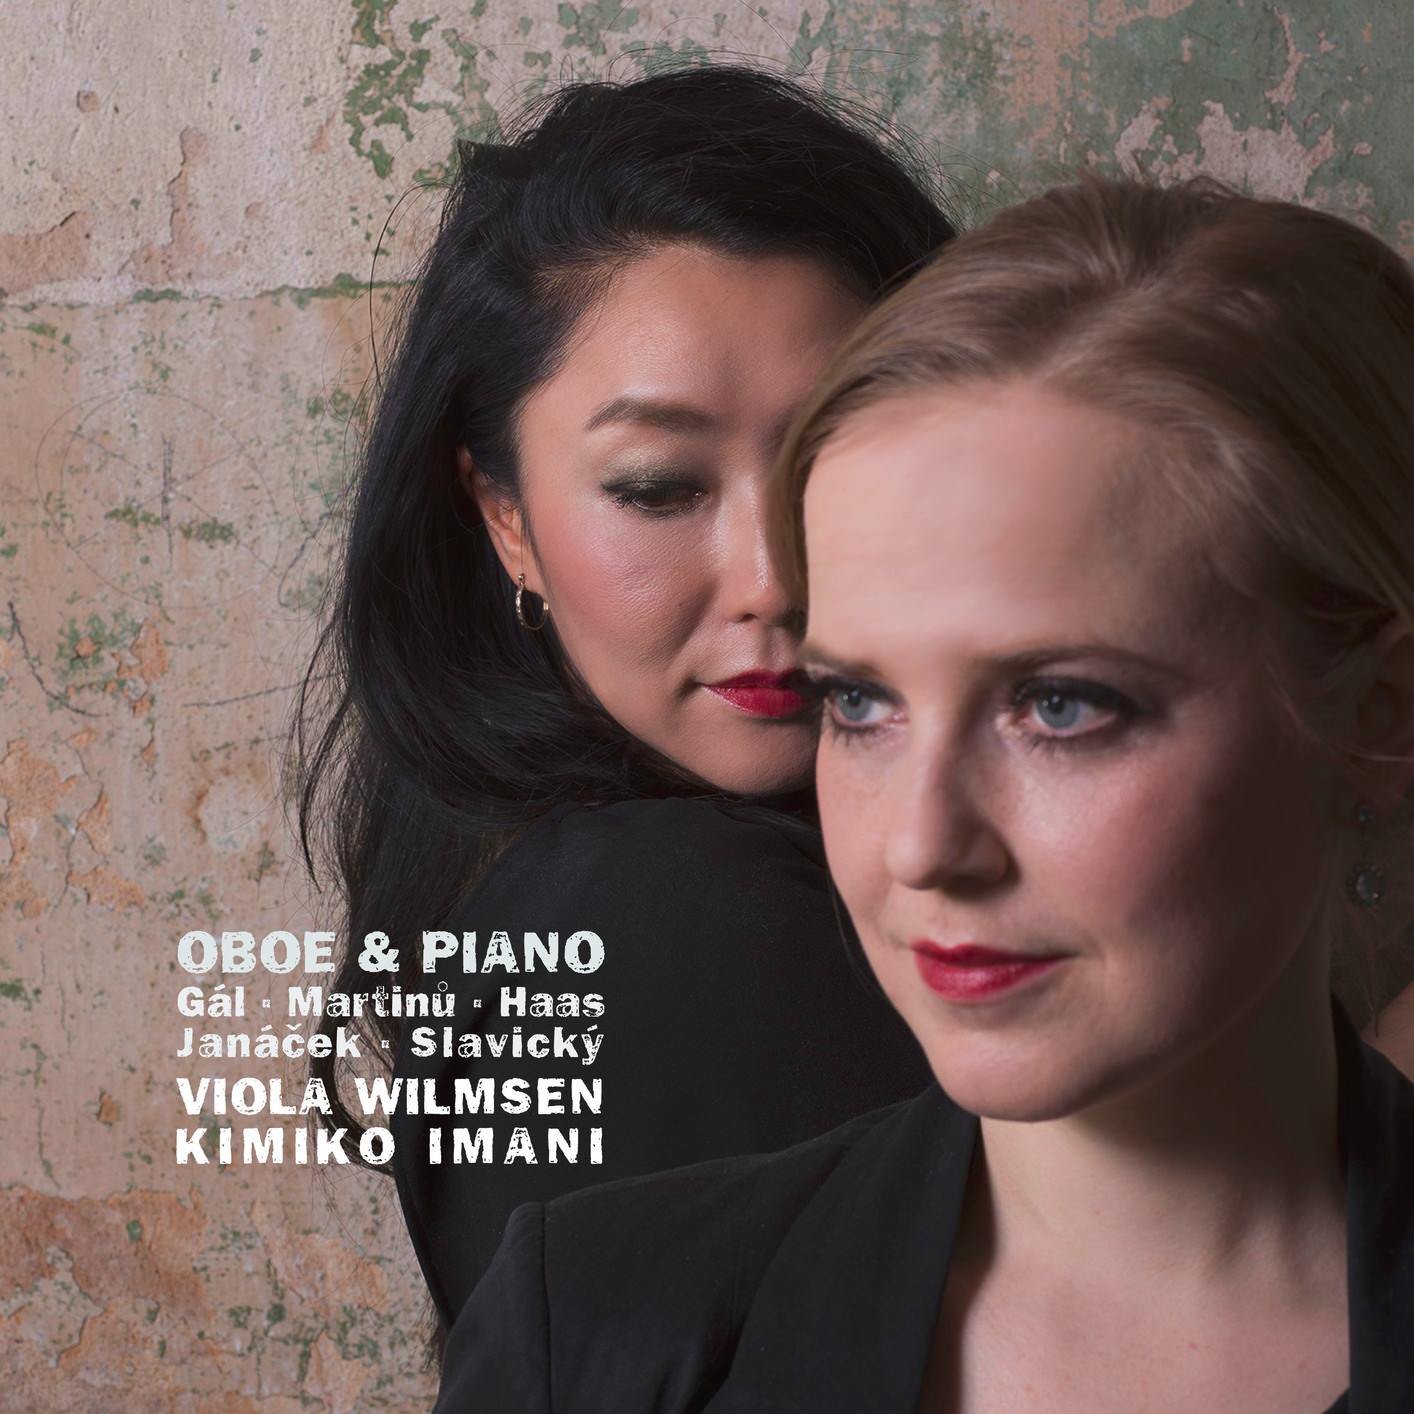 Viola Wilmsen & Kimiko Imani – Gal, Martinu, Haas, Janacek & Slavicky: Oboe & Piano (2017) [Qobuz FLAC 24bit/48kHz]